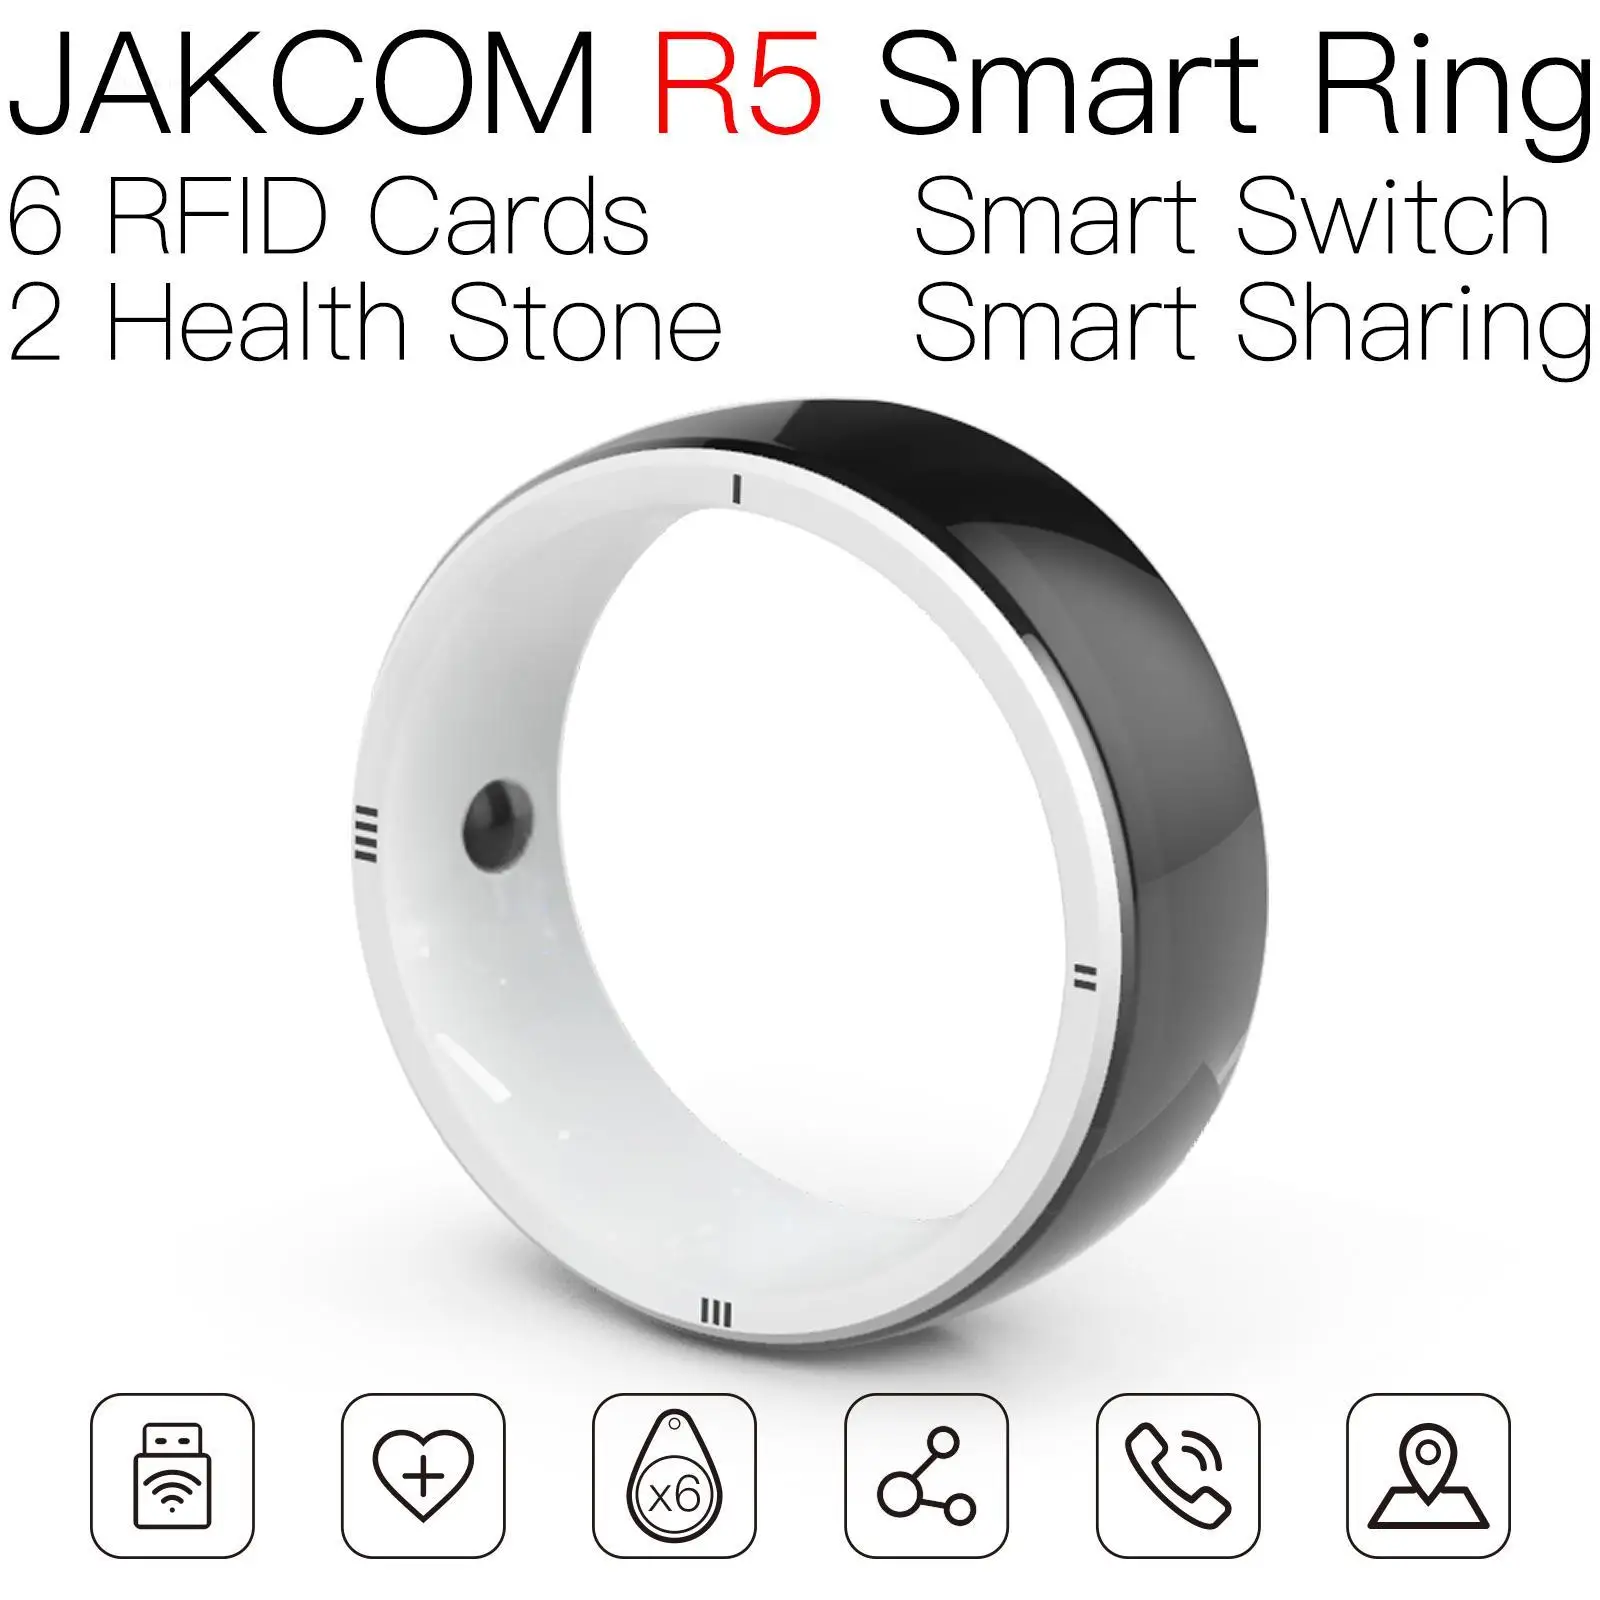 

JAKCOM R5 Smart Ring better than raymond nfc photos new horizons pigeons ring card vehicle rfid tag microchip